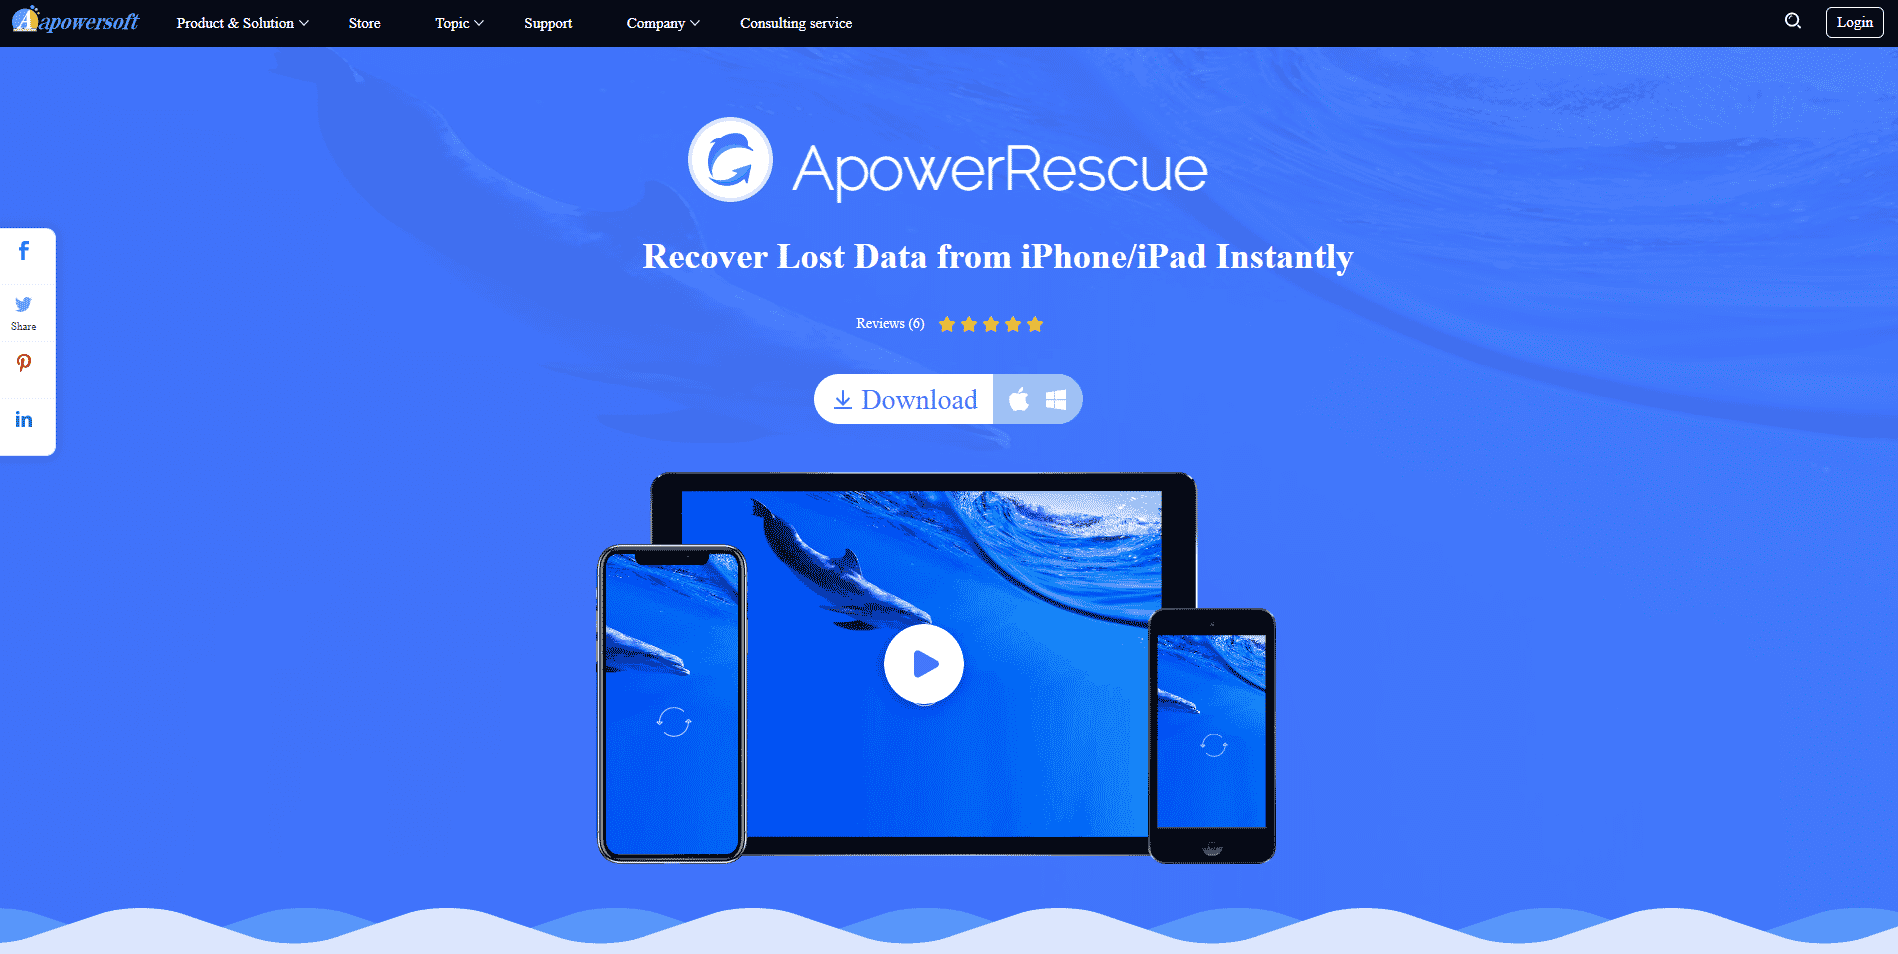 APowerRescue website